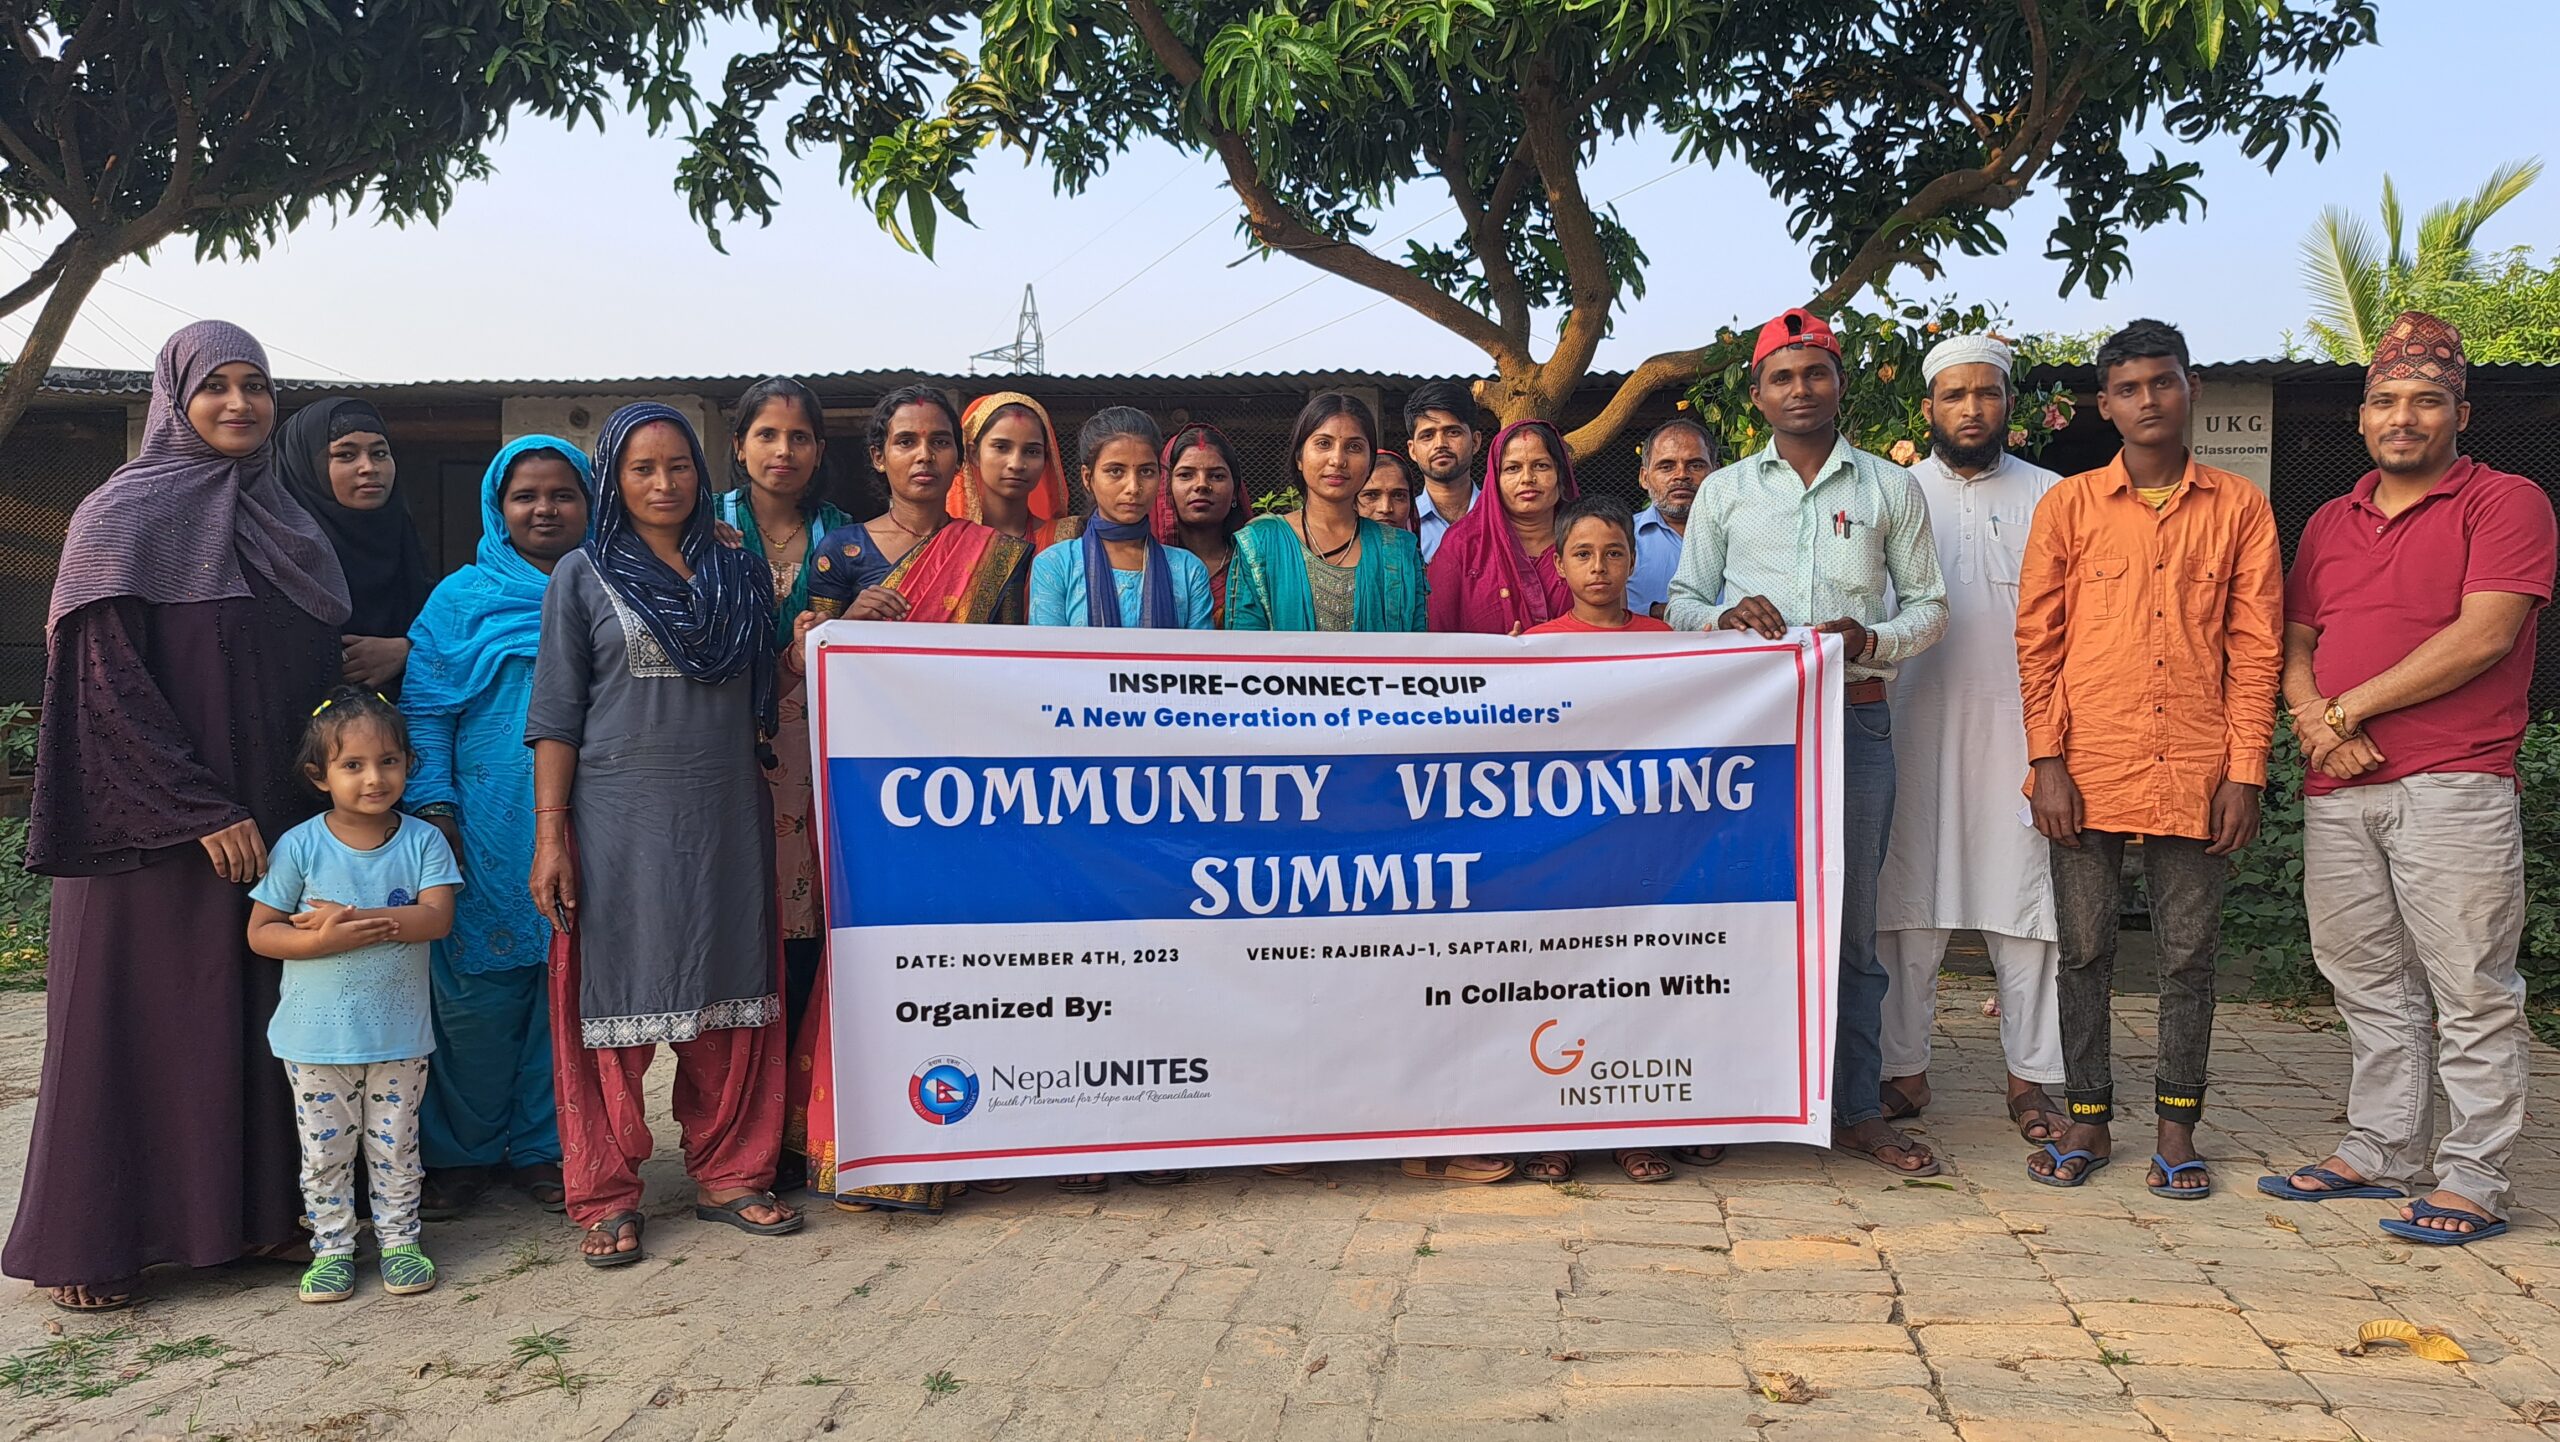 Community Visioning Summit in Rajbiraj